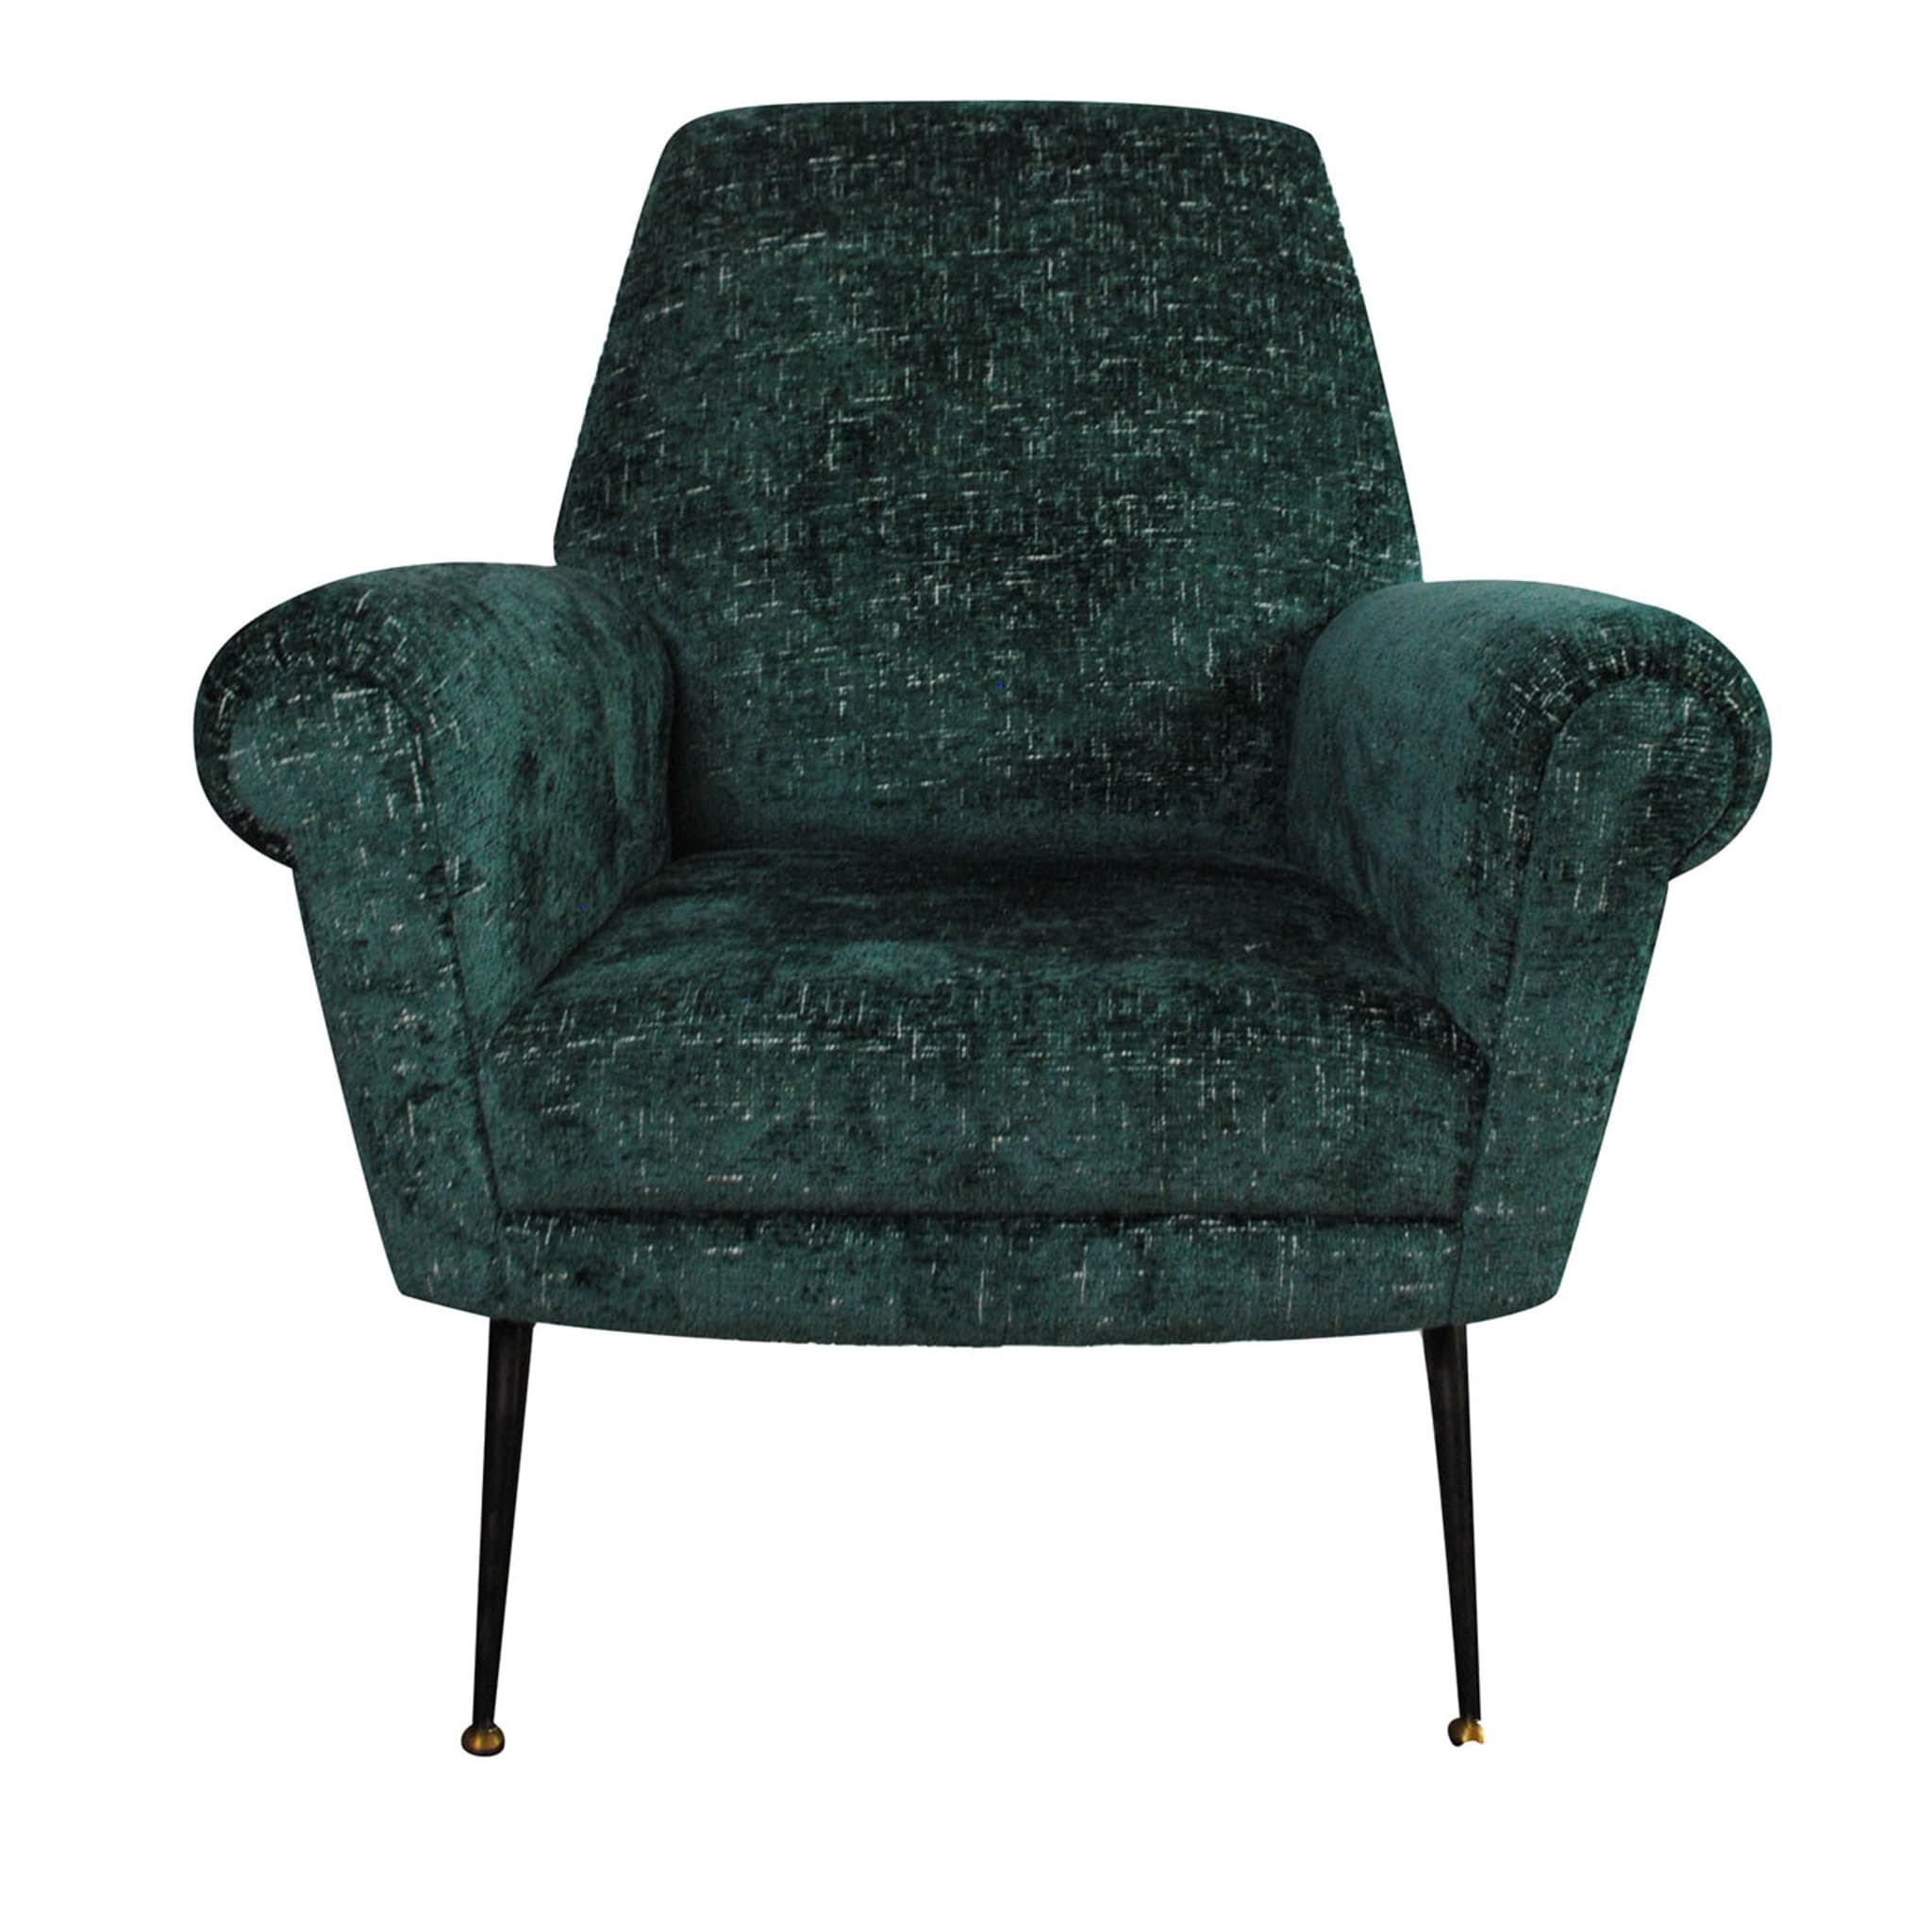 Echter grüner Vintage-Sessel - Hauptansicht